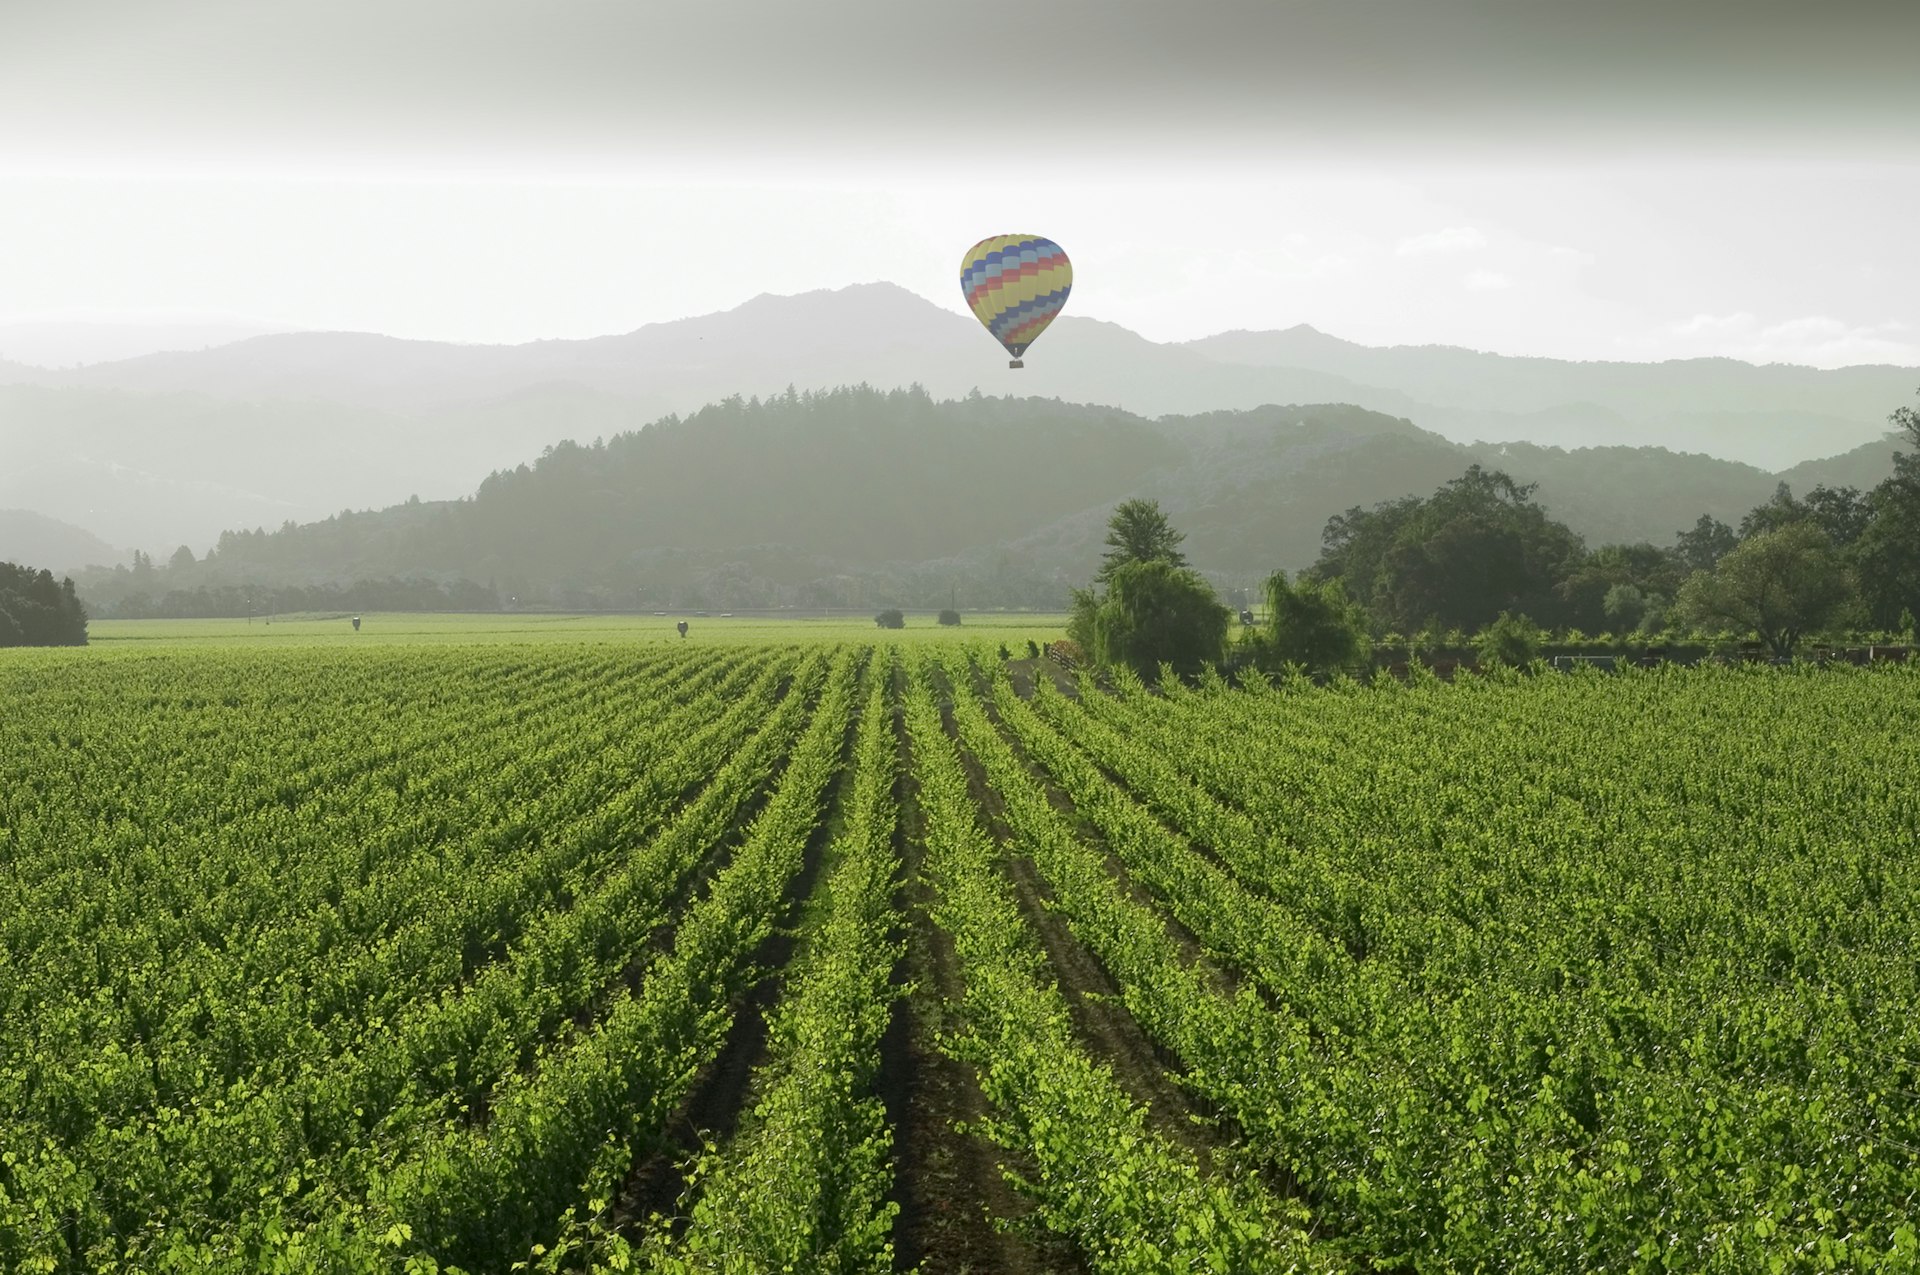 Hot air balloon floats over a vineyard in Napa Valley, California, USA